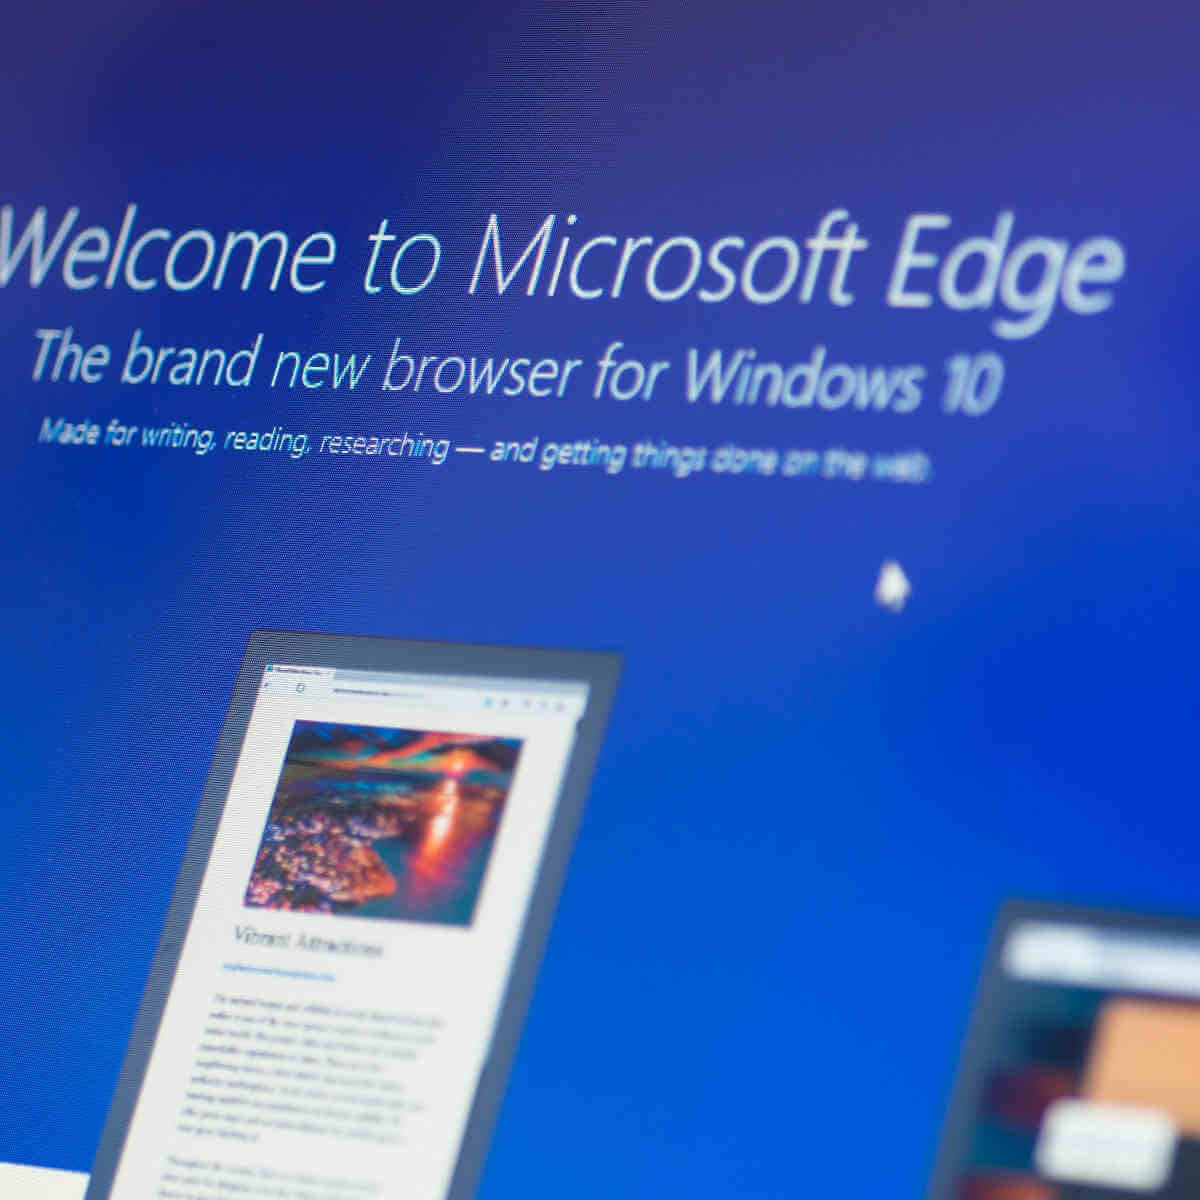 Microsoft Edge promo in Windows 10